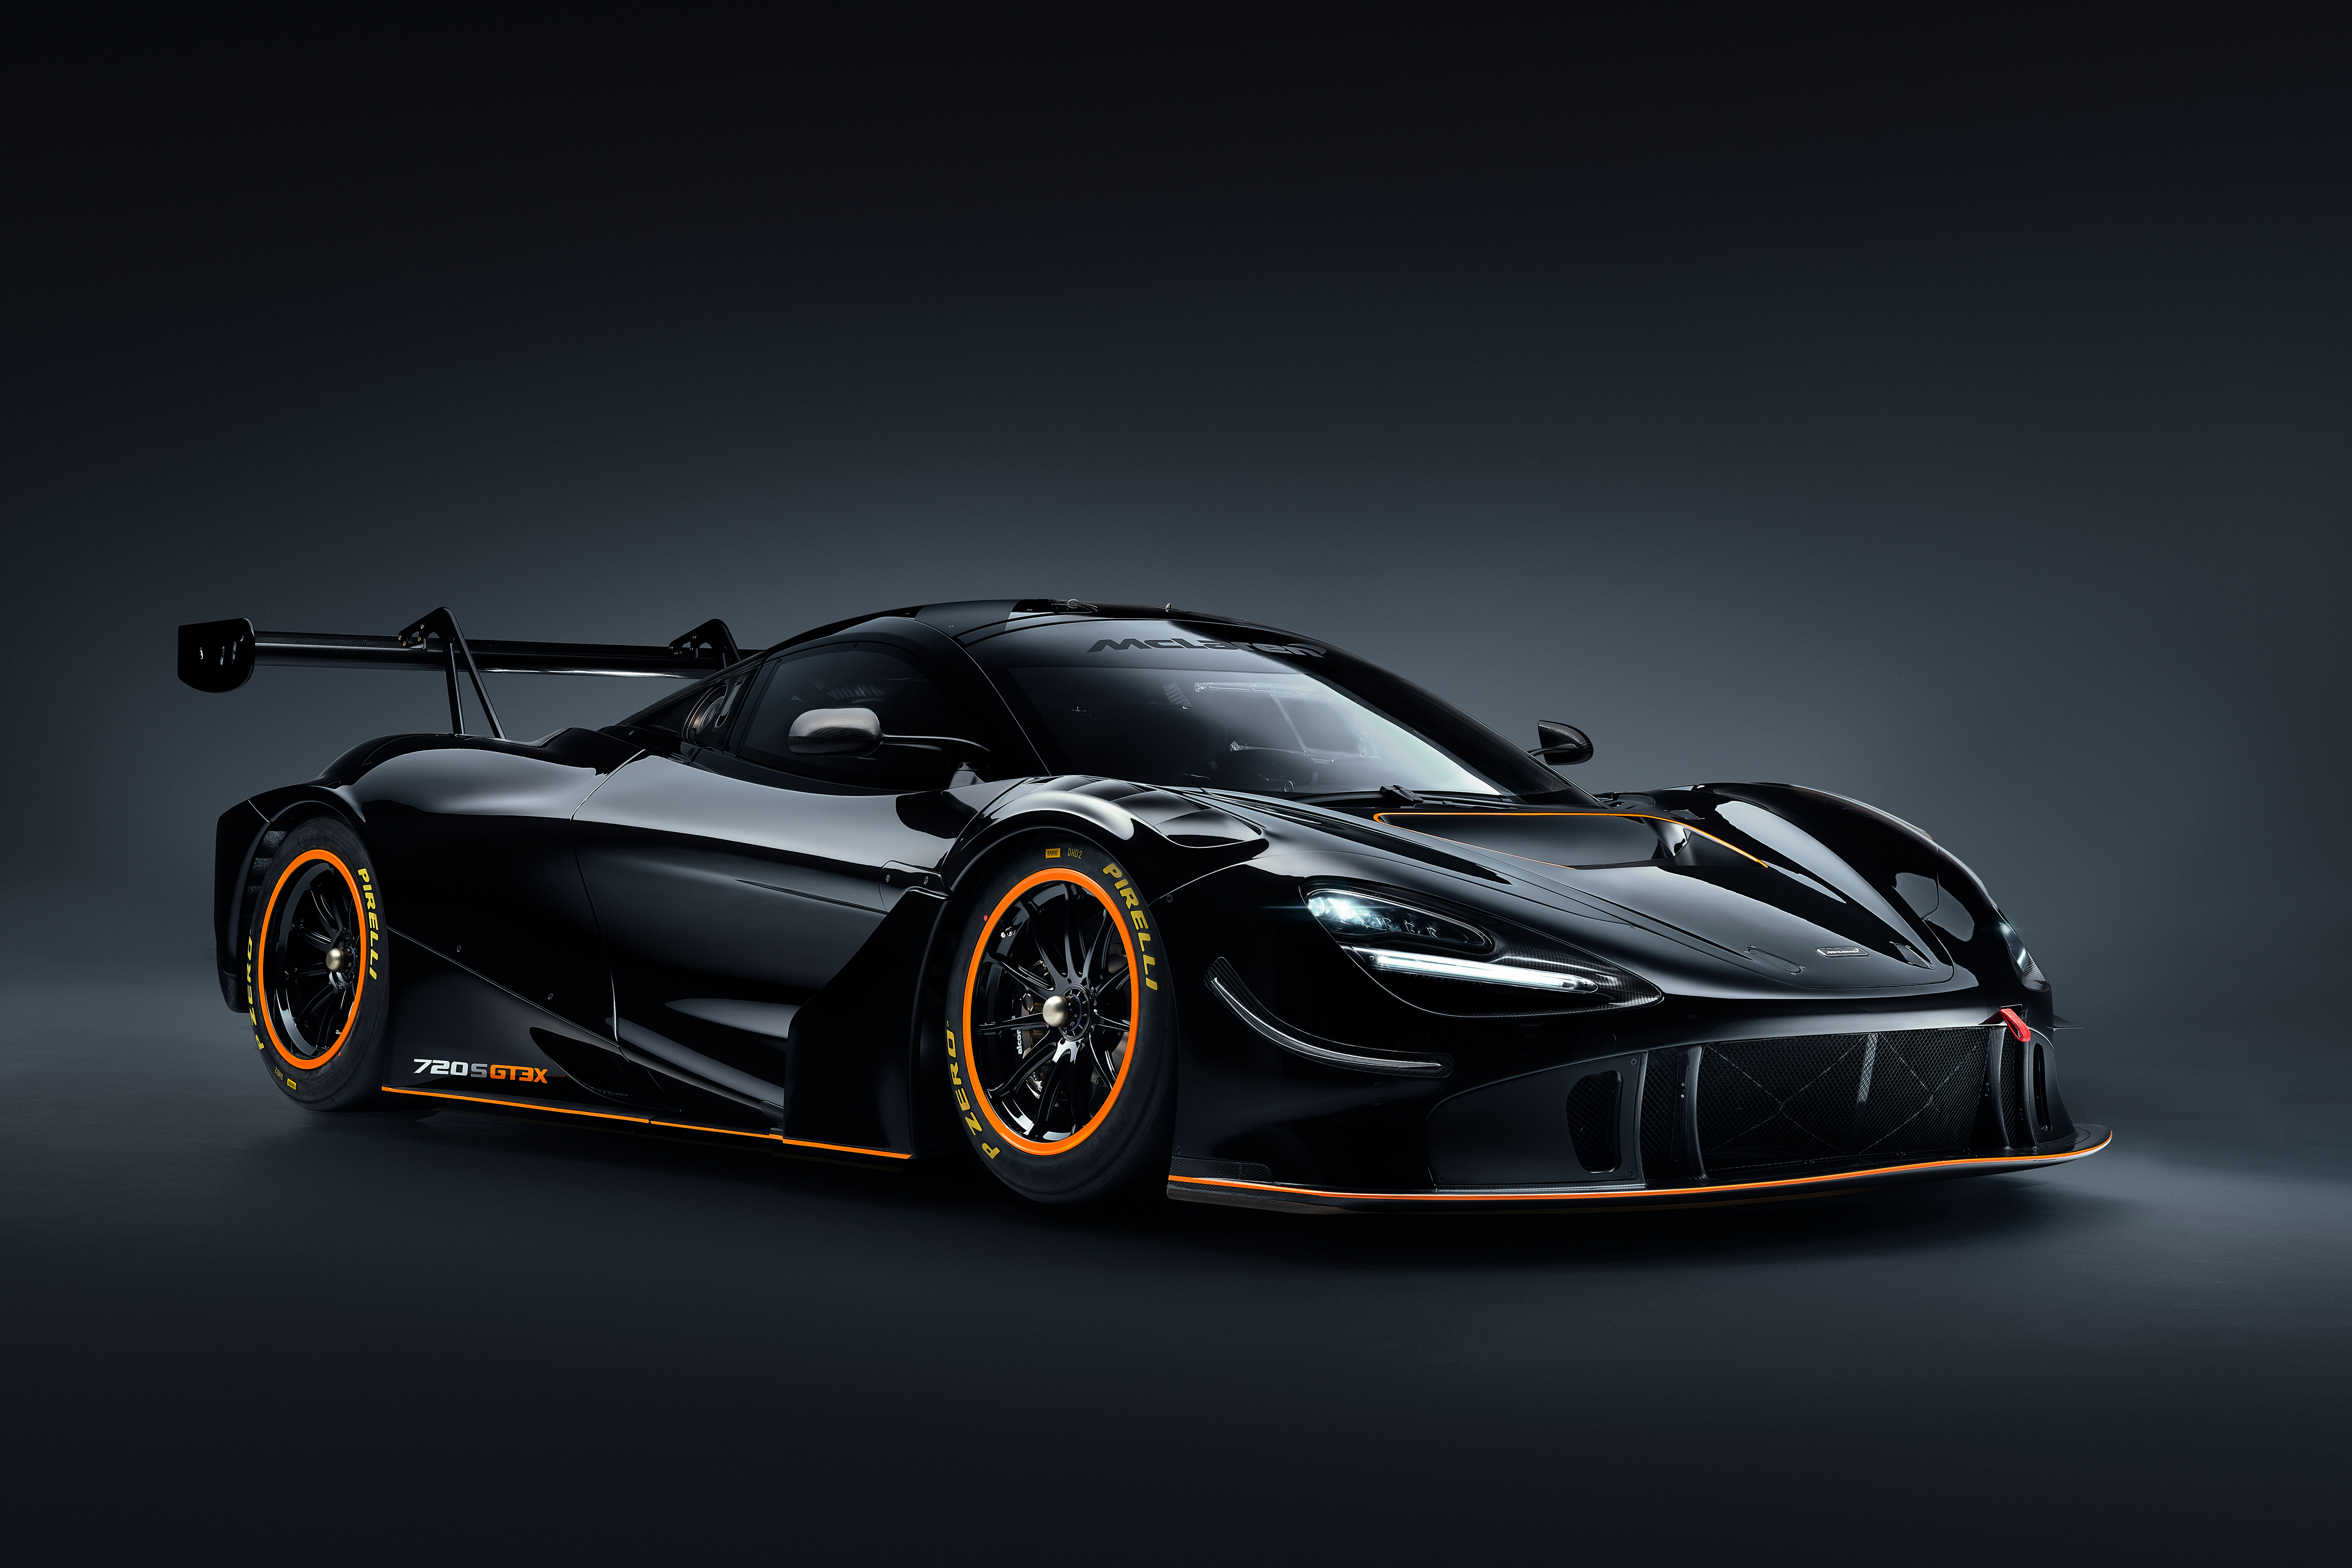 Foto McLaren 720S GT3X, 2021 Svart Metallisk automobil 4500x3000 bil Bilar